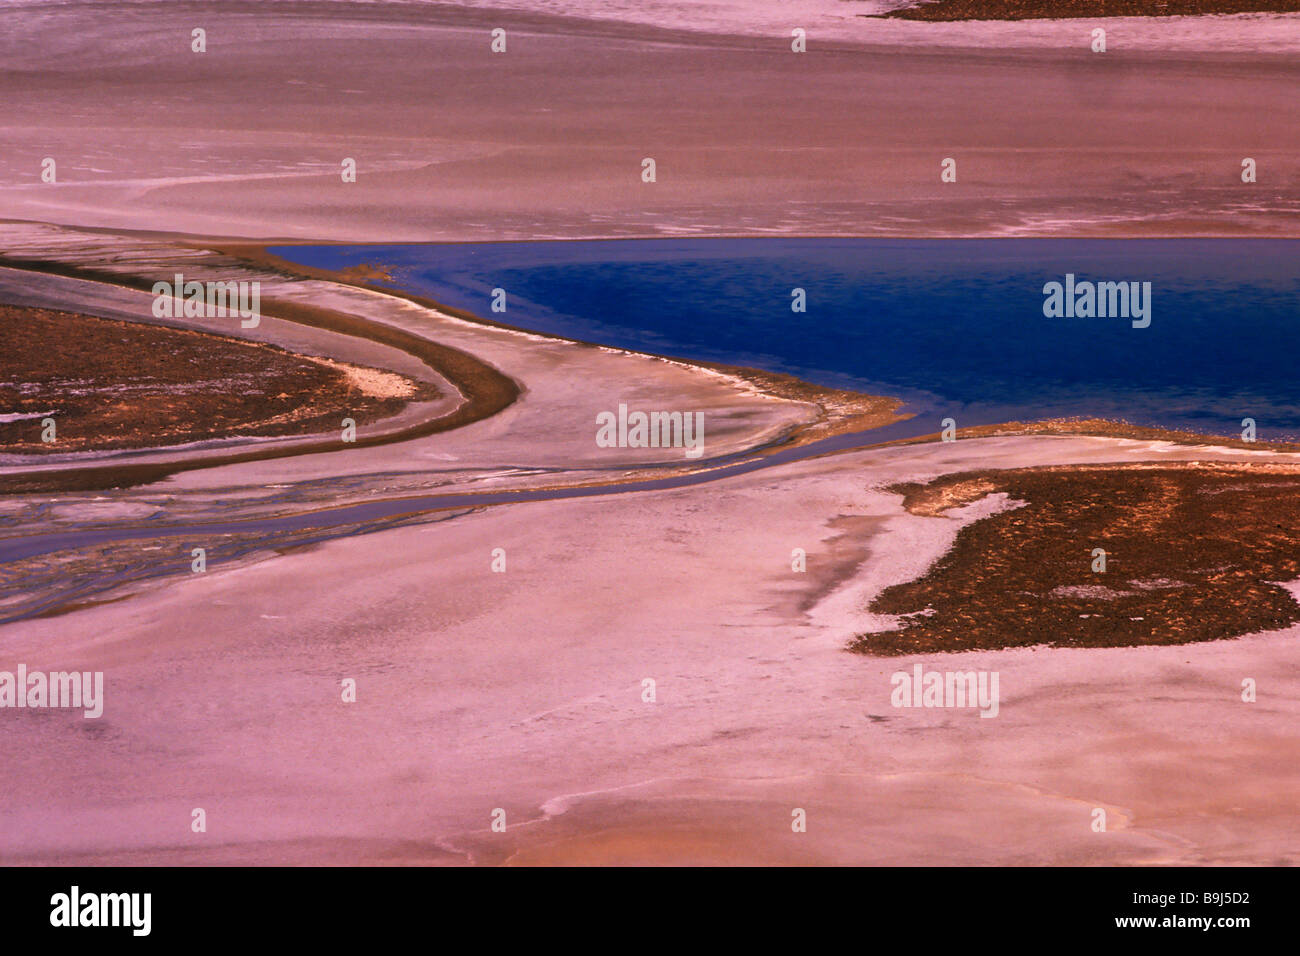 Salar de Quisquiro, il Deserto di Atacama, Cile, Suedamerika Foto Stock